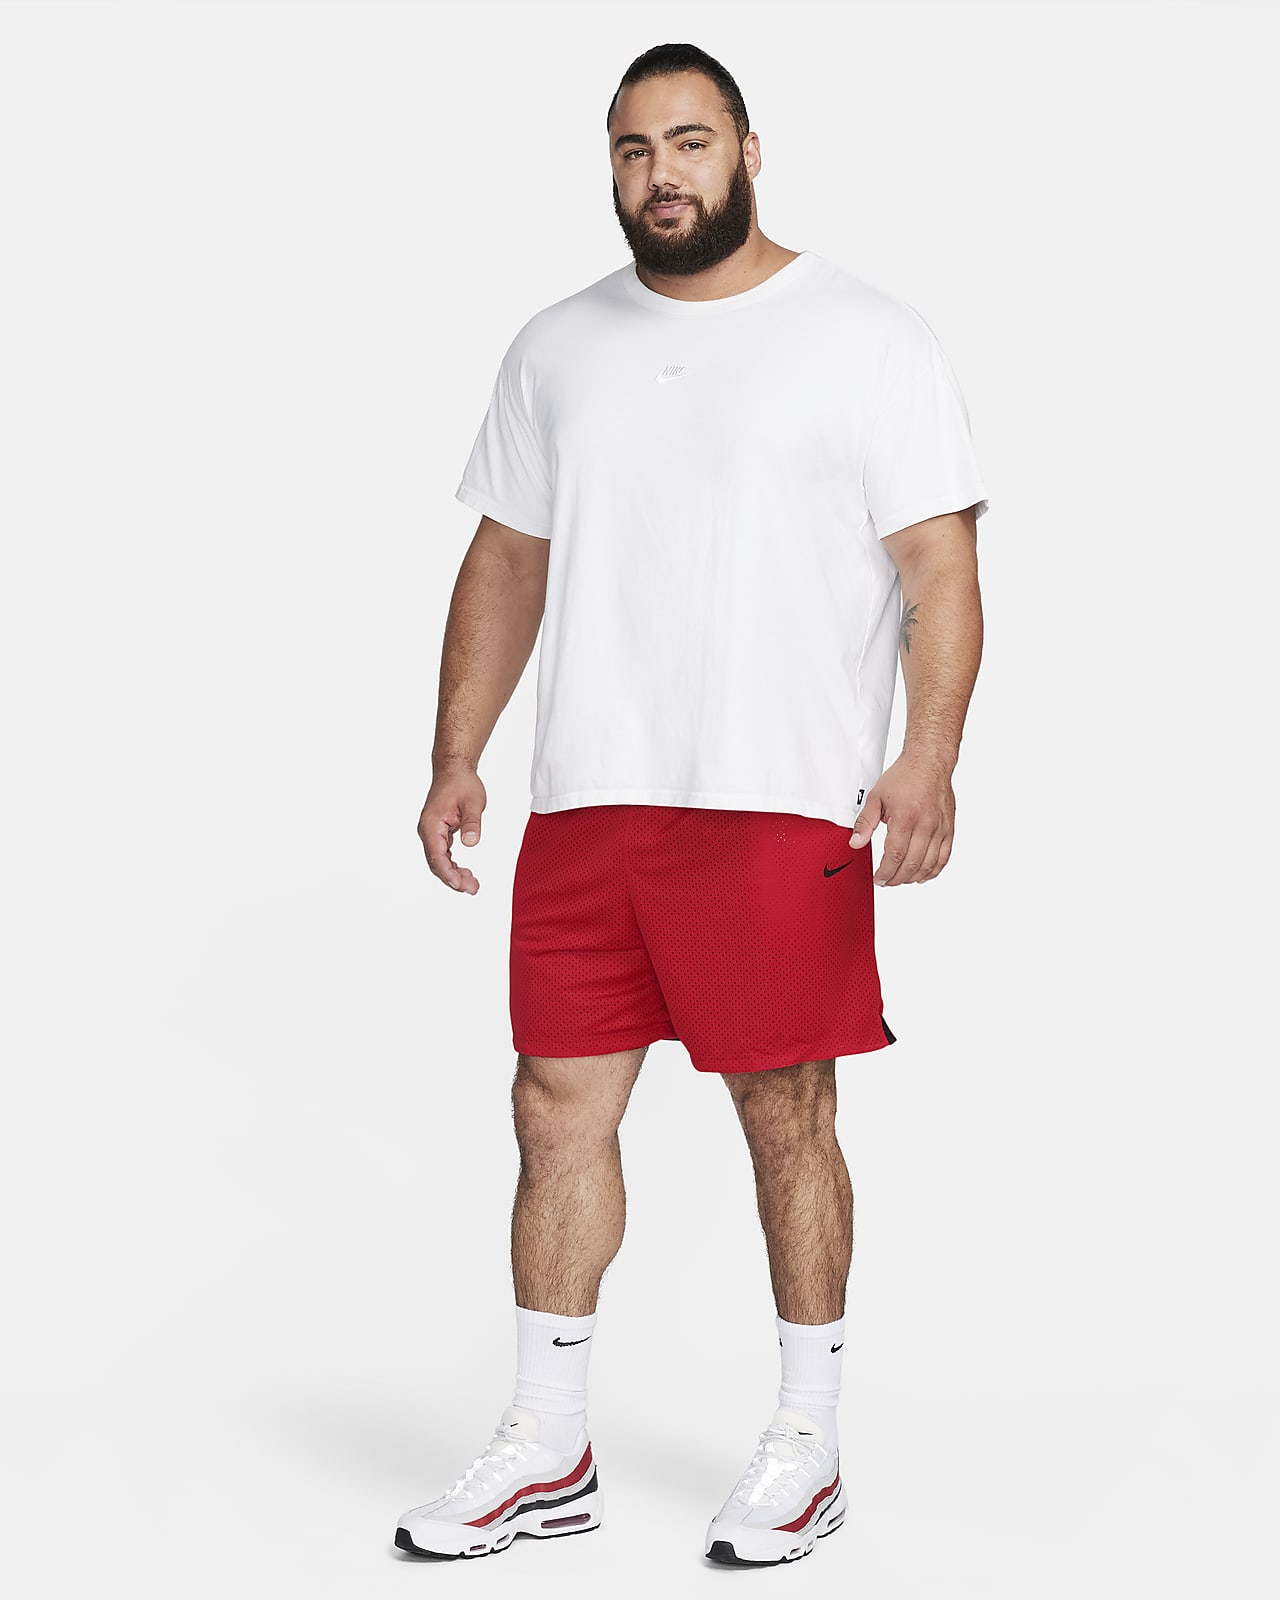 Nike, Practice Shorts, Royal/White